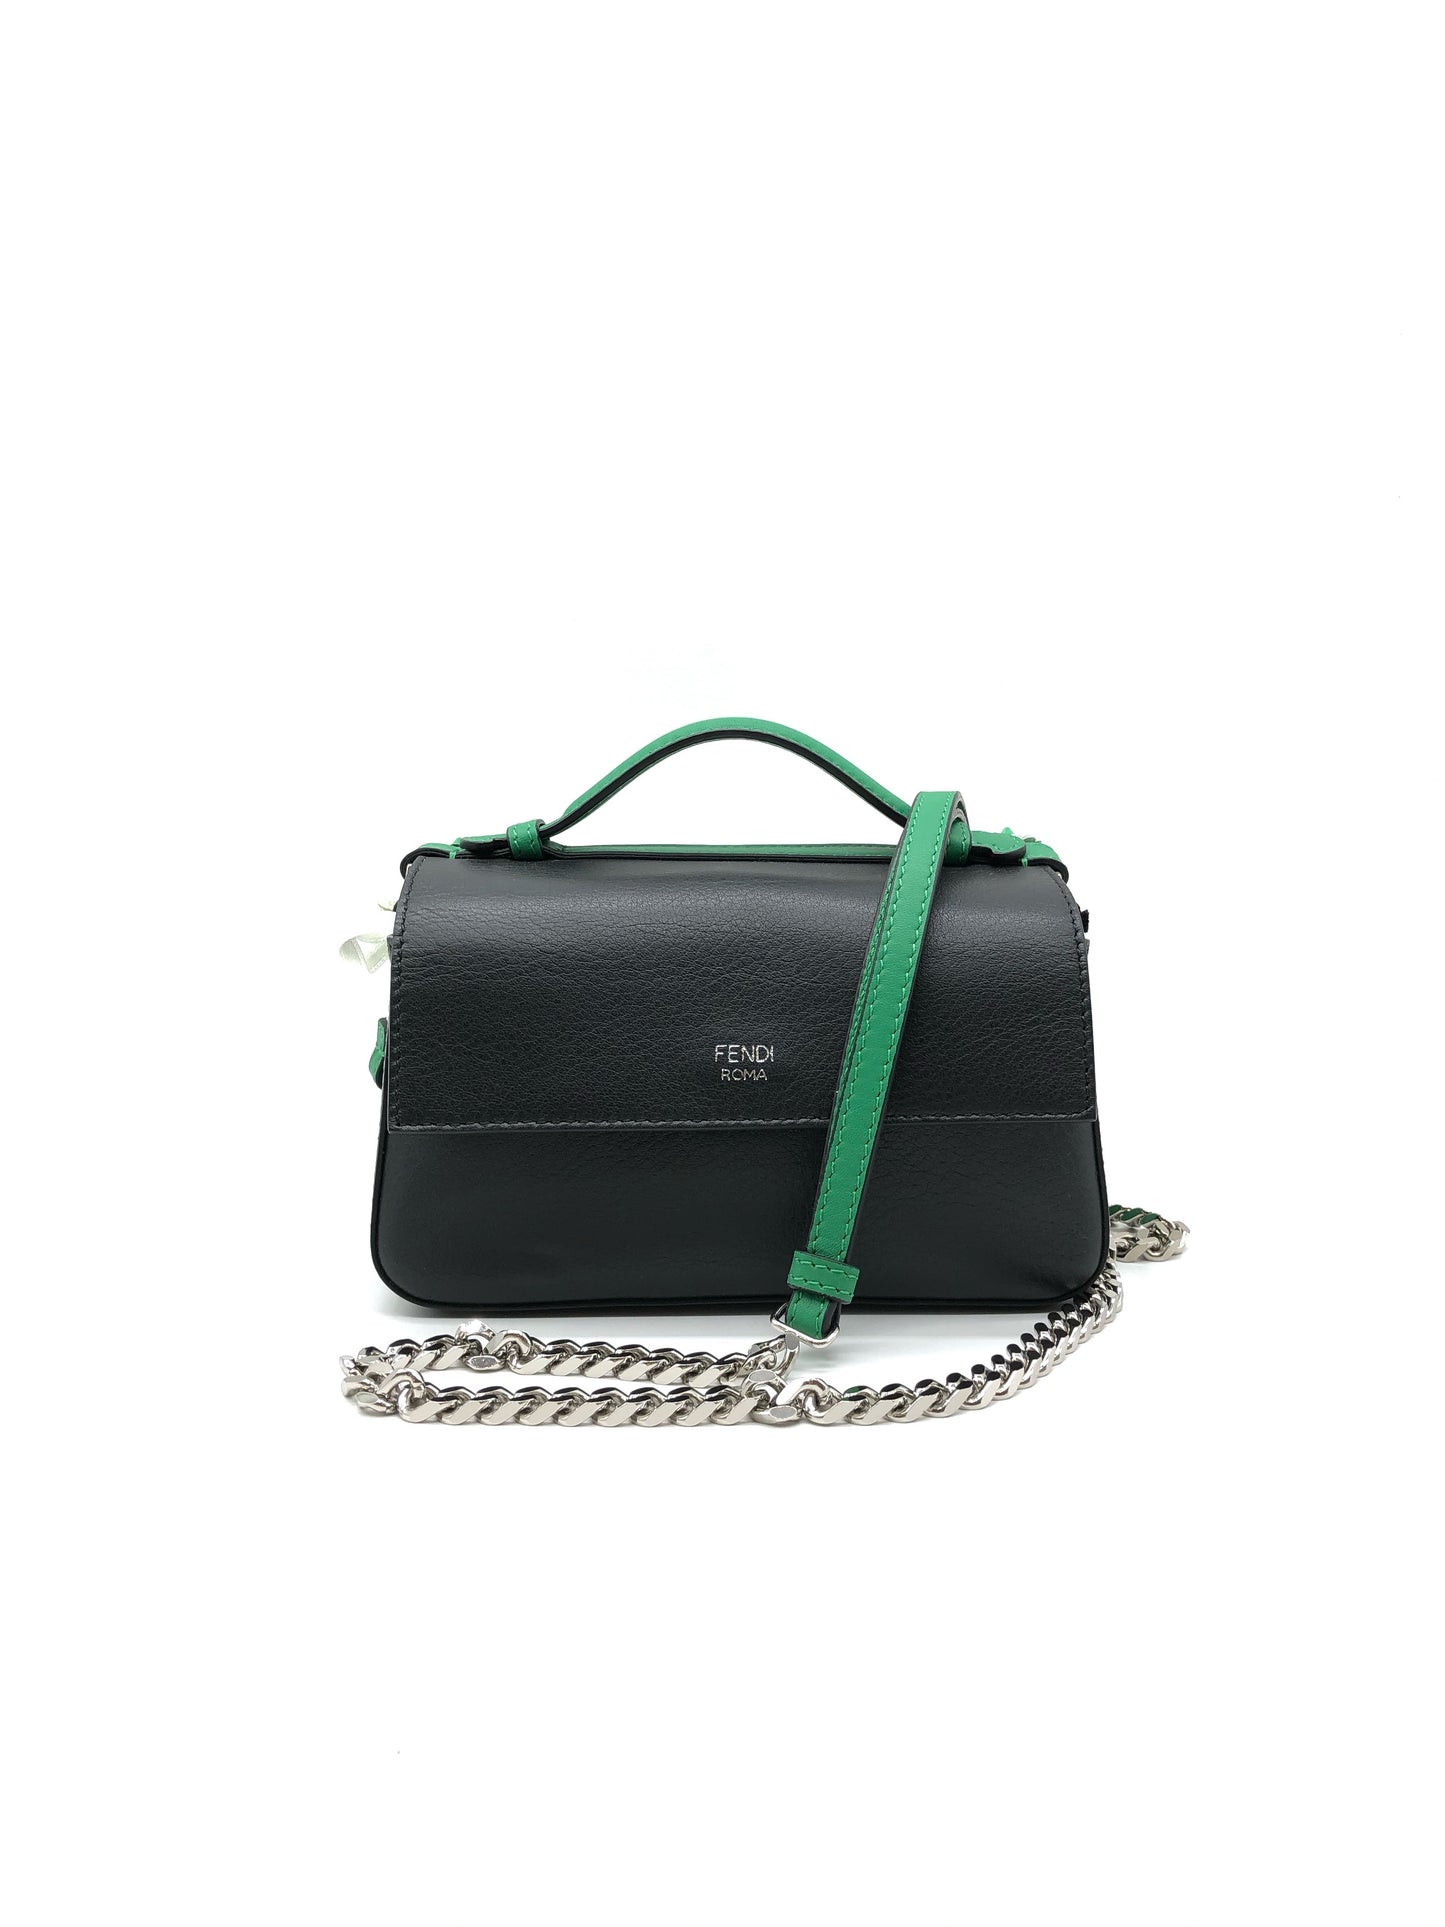 Fendi Green/Black Double Micro Baguette Bag